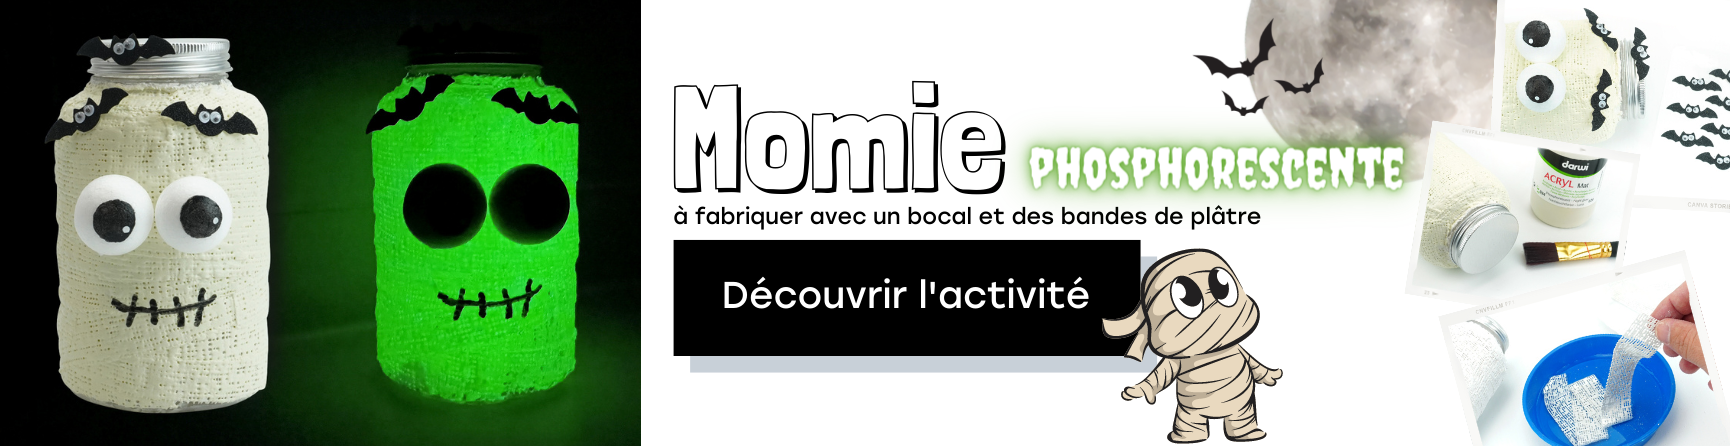 Momie phosphorescente